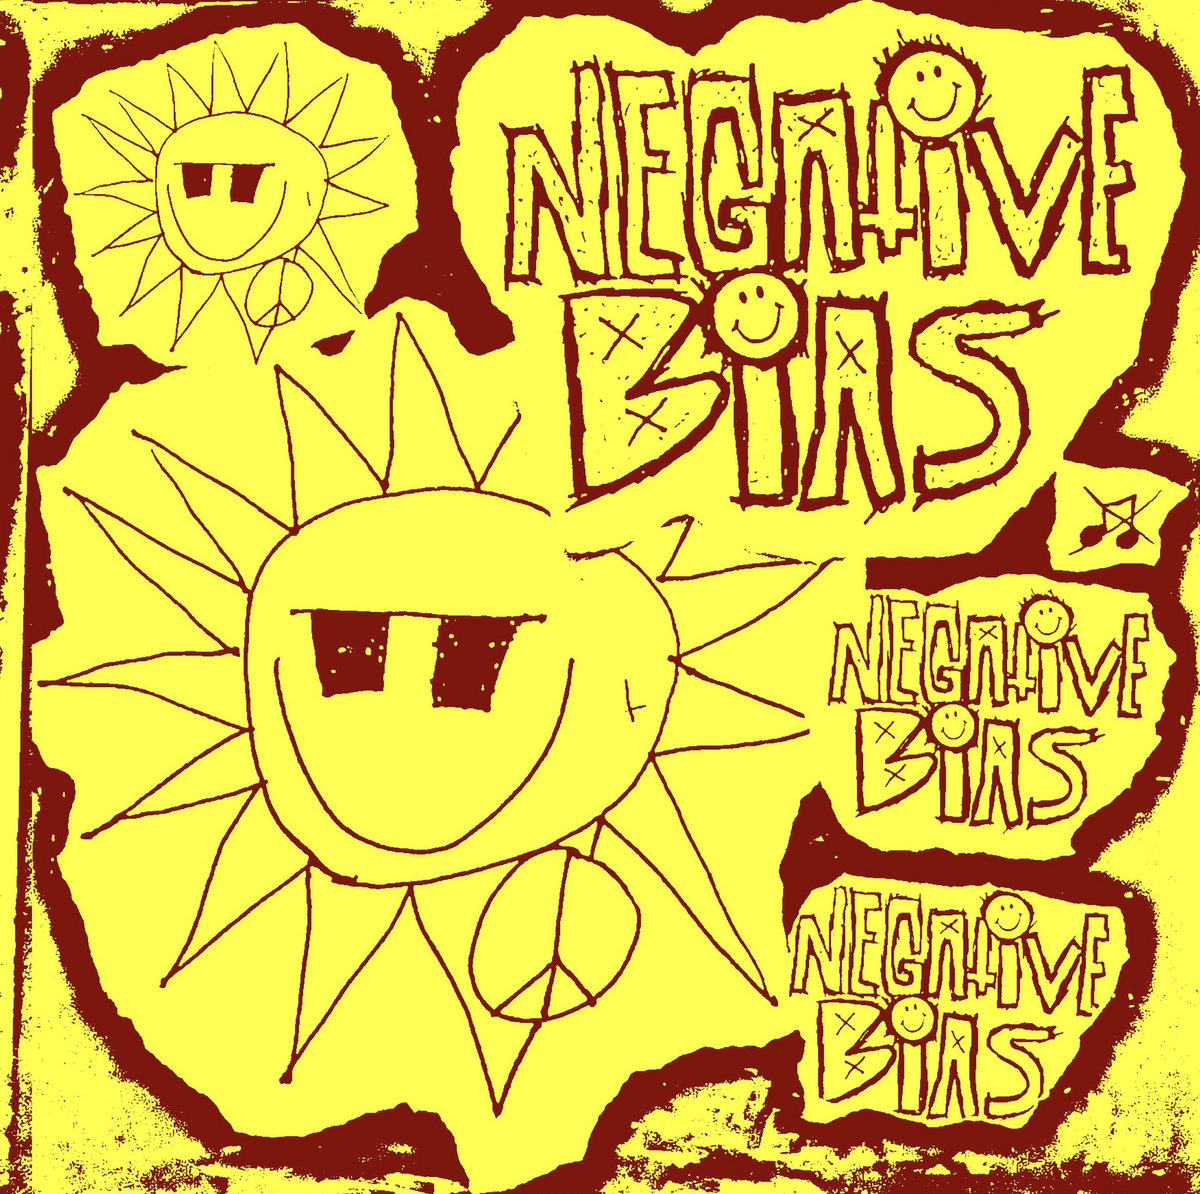 Negative Bias - Self Titled LP